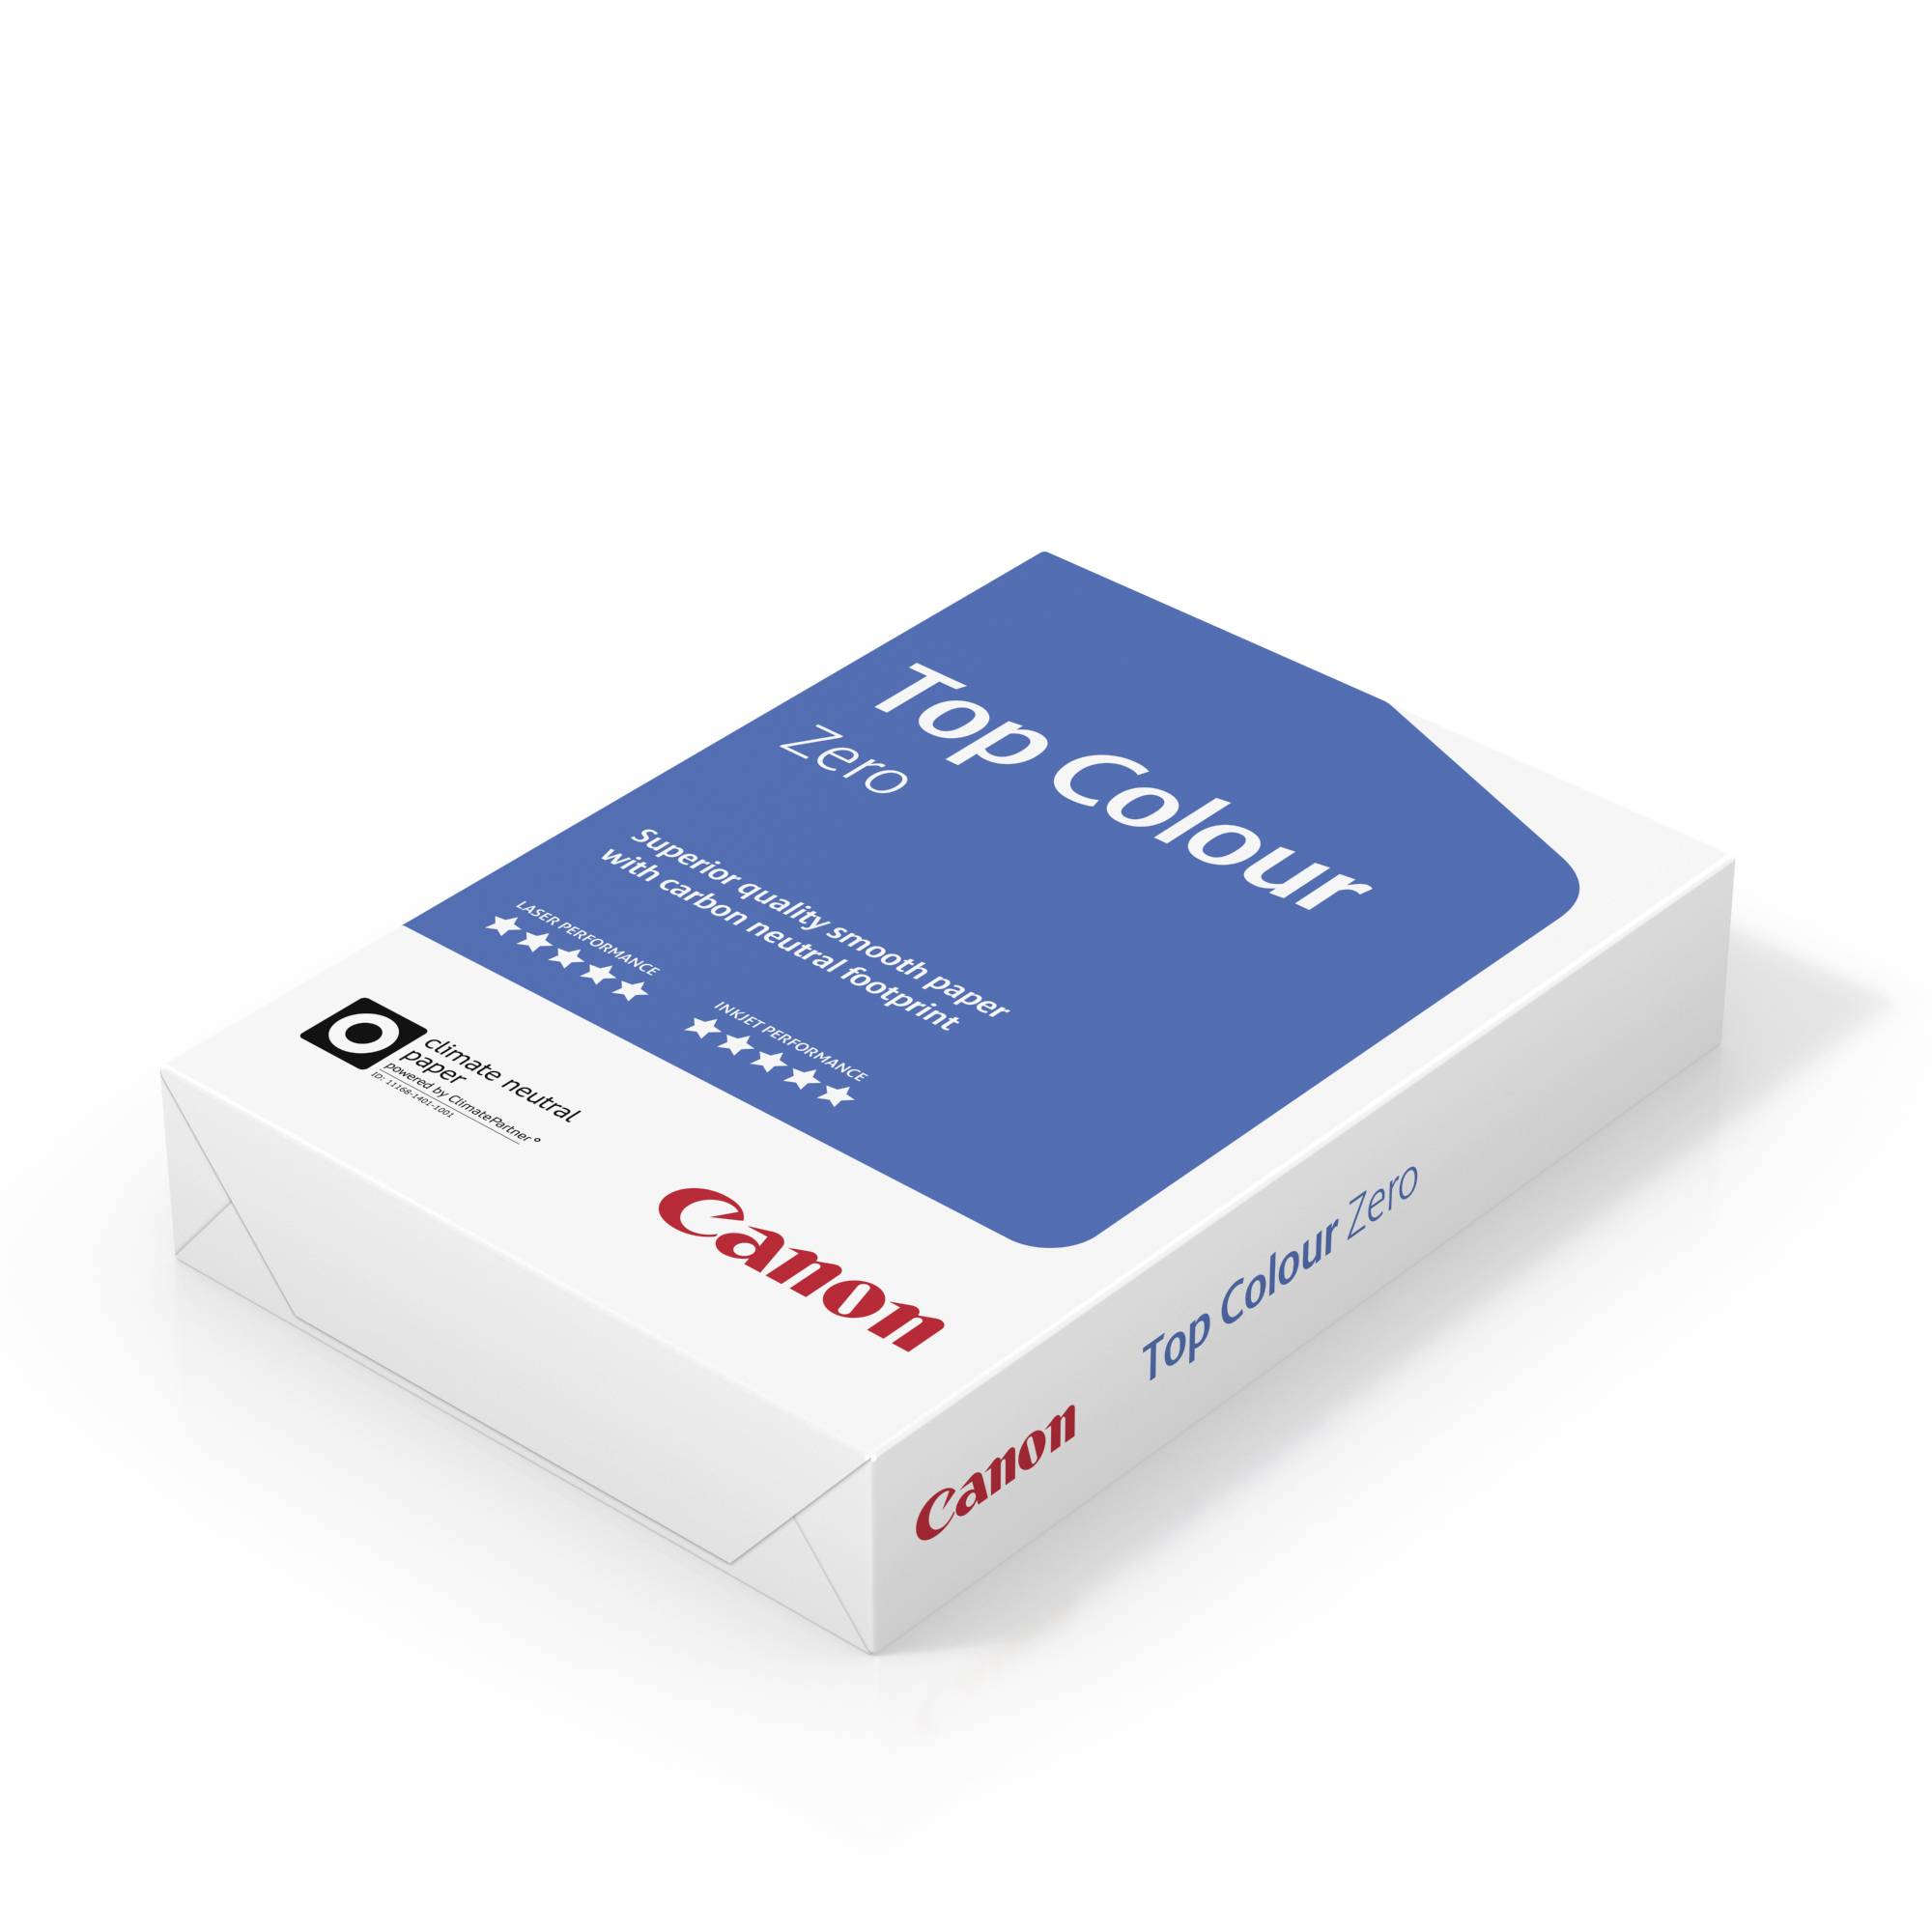 CANON Océ Top Color Paper FSC SAT033 - almin